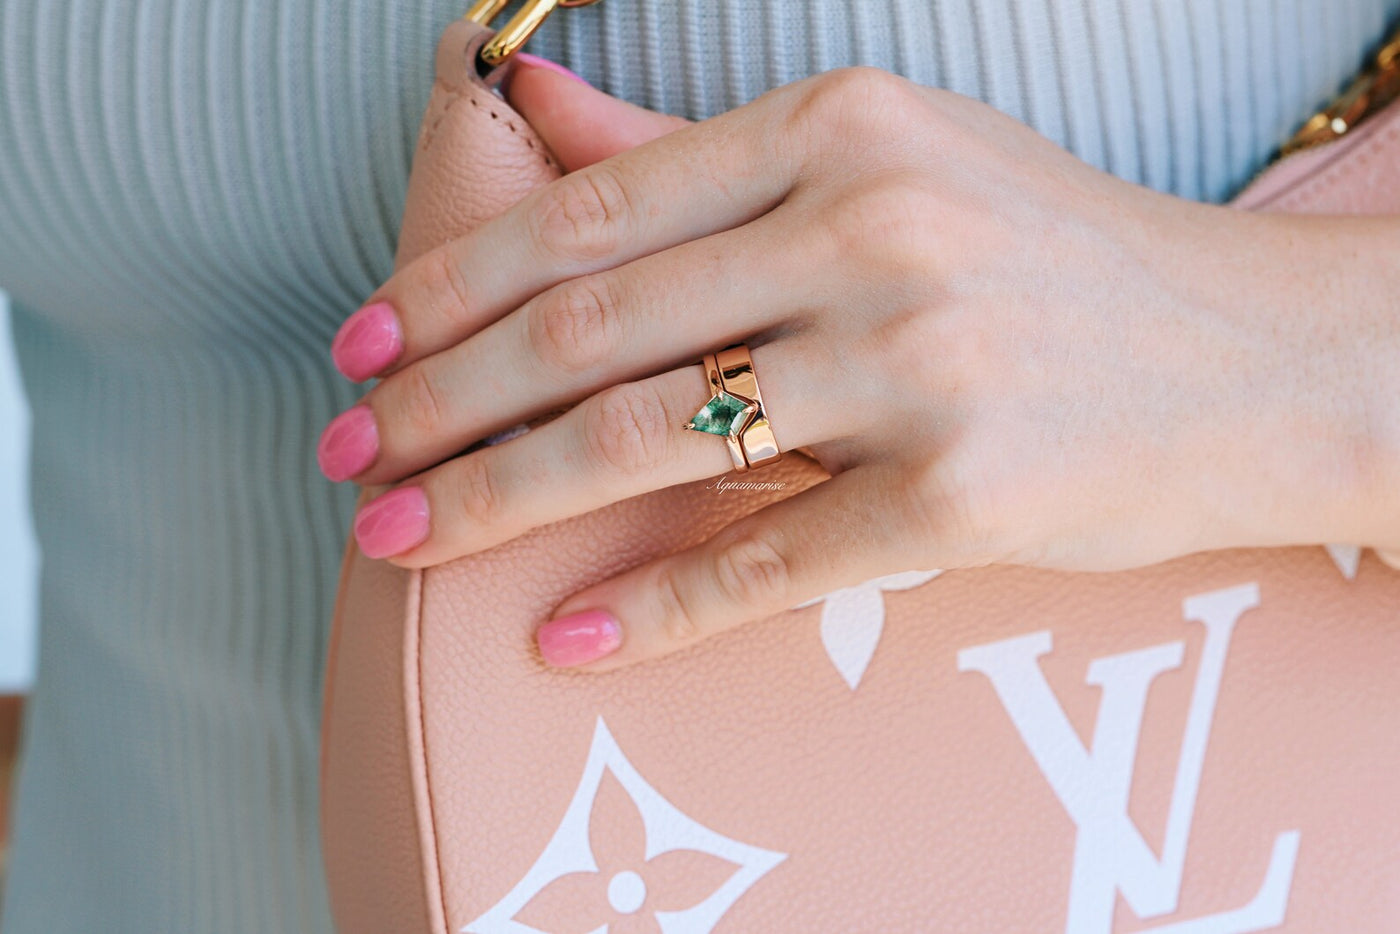 Kite Green Moss Agate Ring For Women- 14K Rose Gold Vermeil Simple Kite Engagement Ring For Her- Geometric Wedding Ring- Dainty Promise Ring